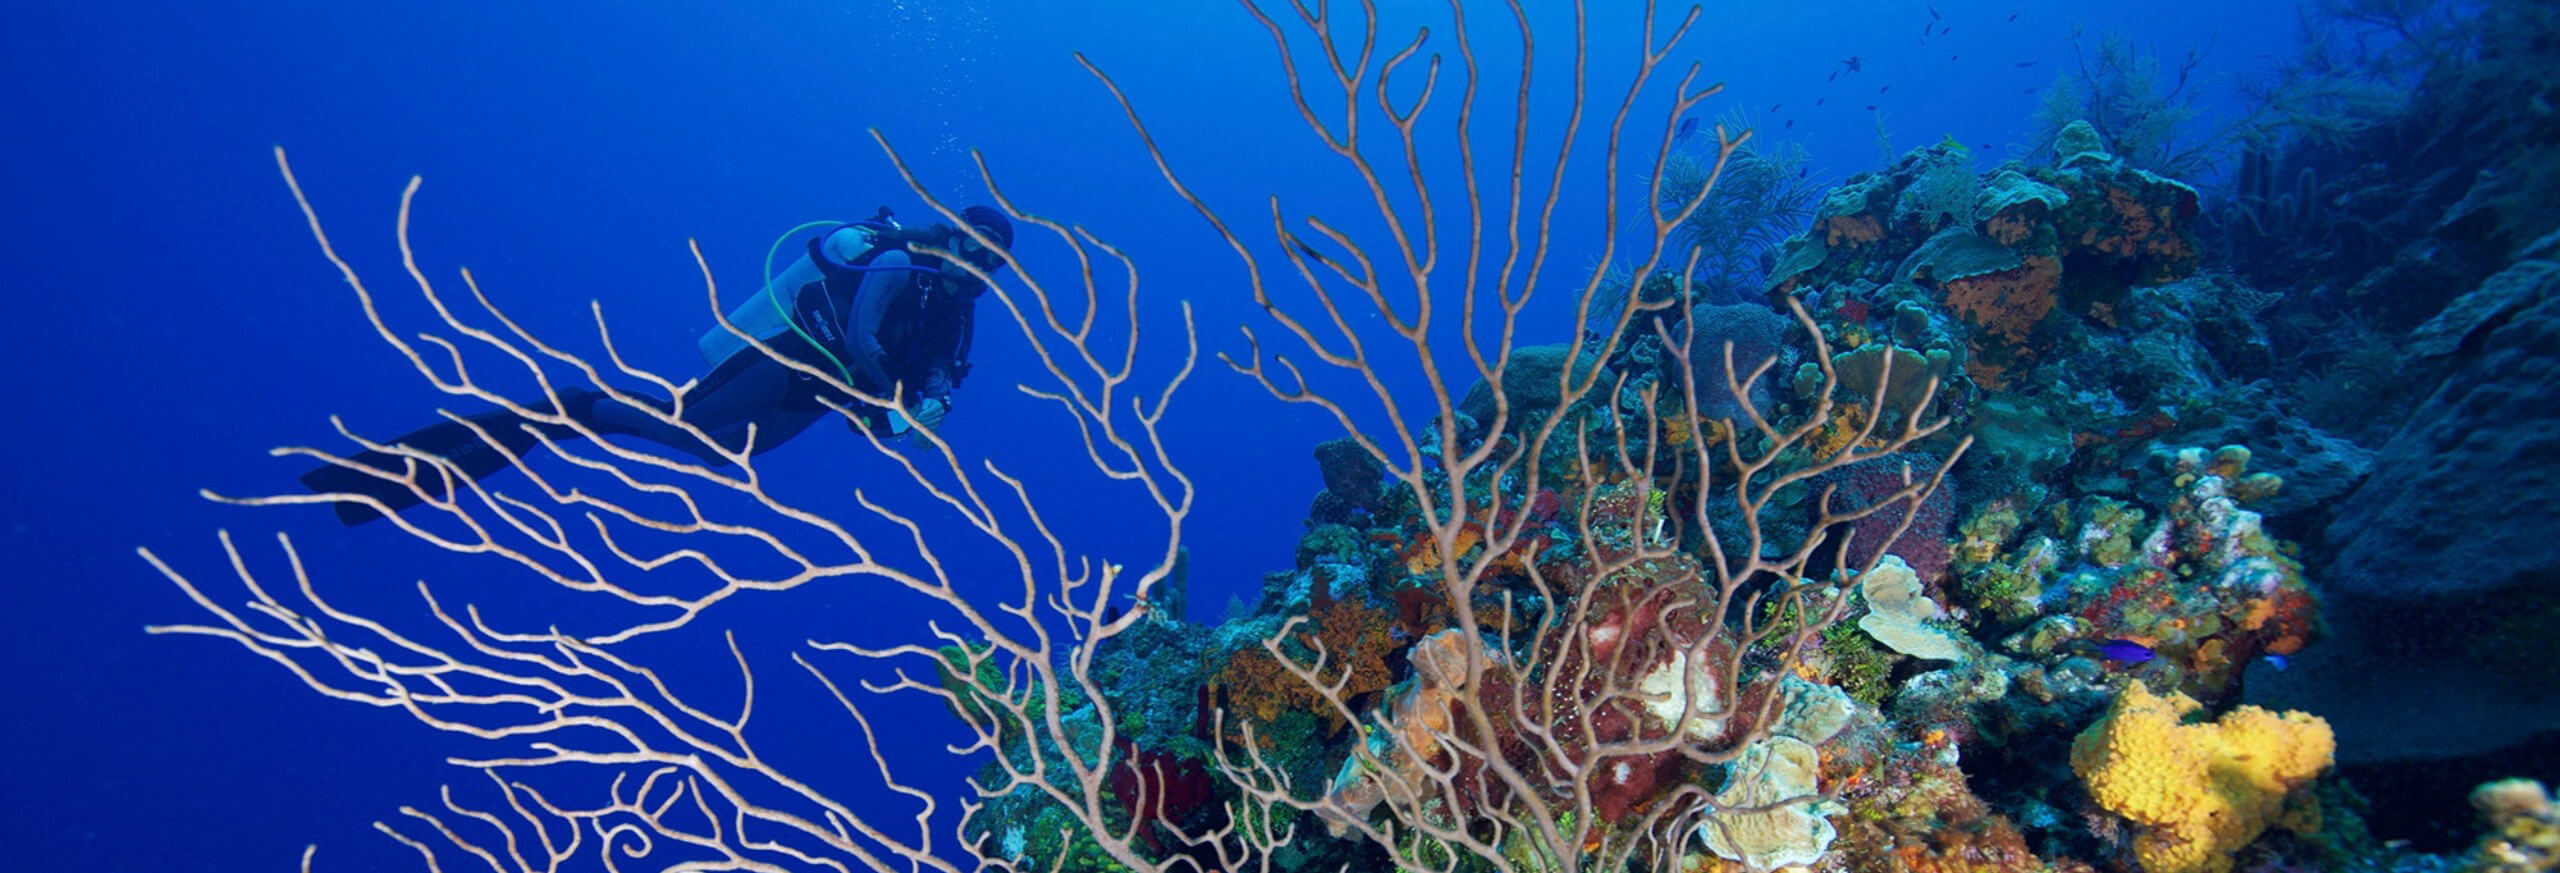 Gregory Piper corals